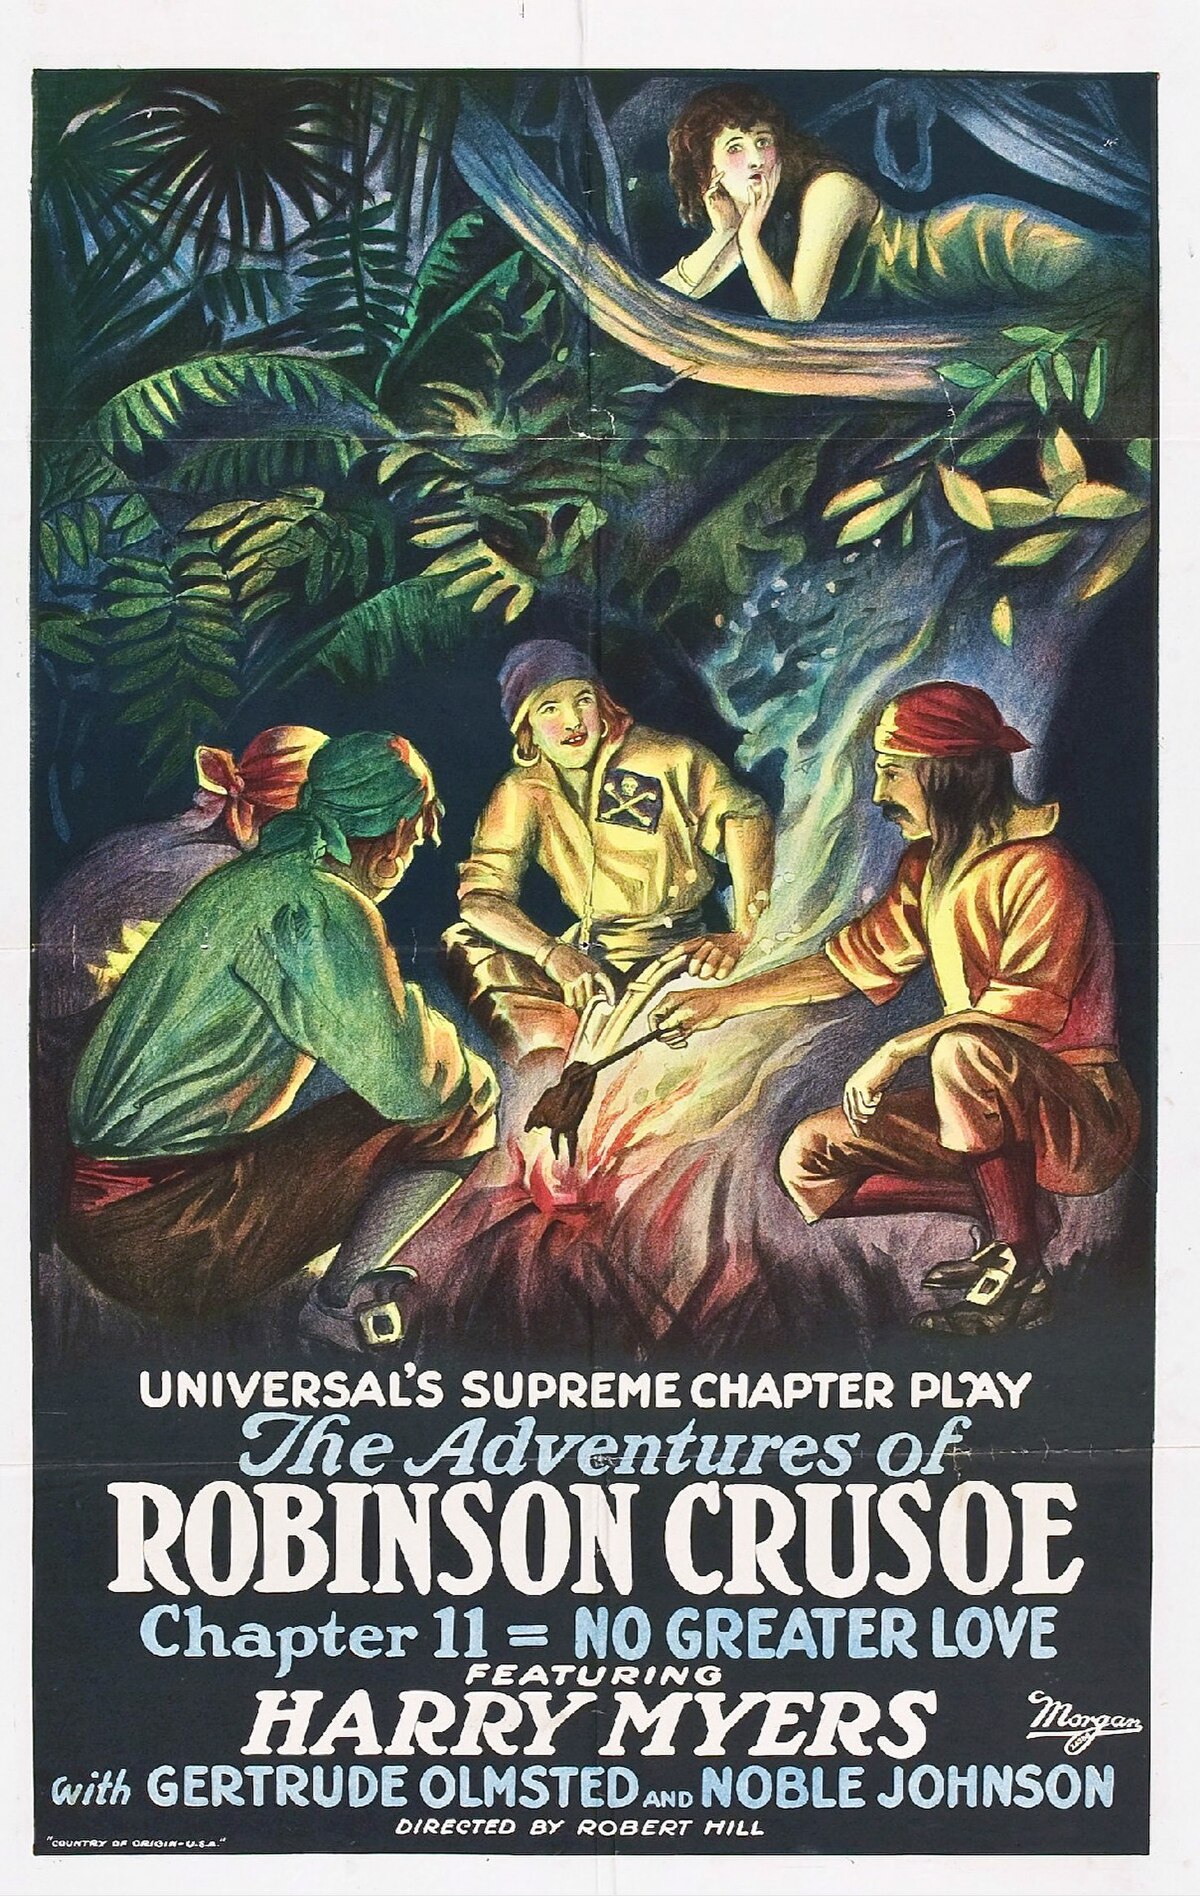 robinson crusoe epub free download